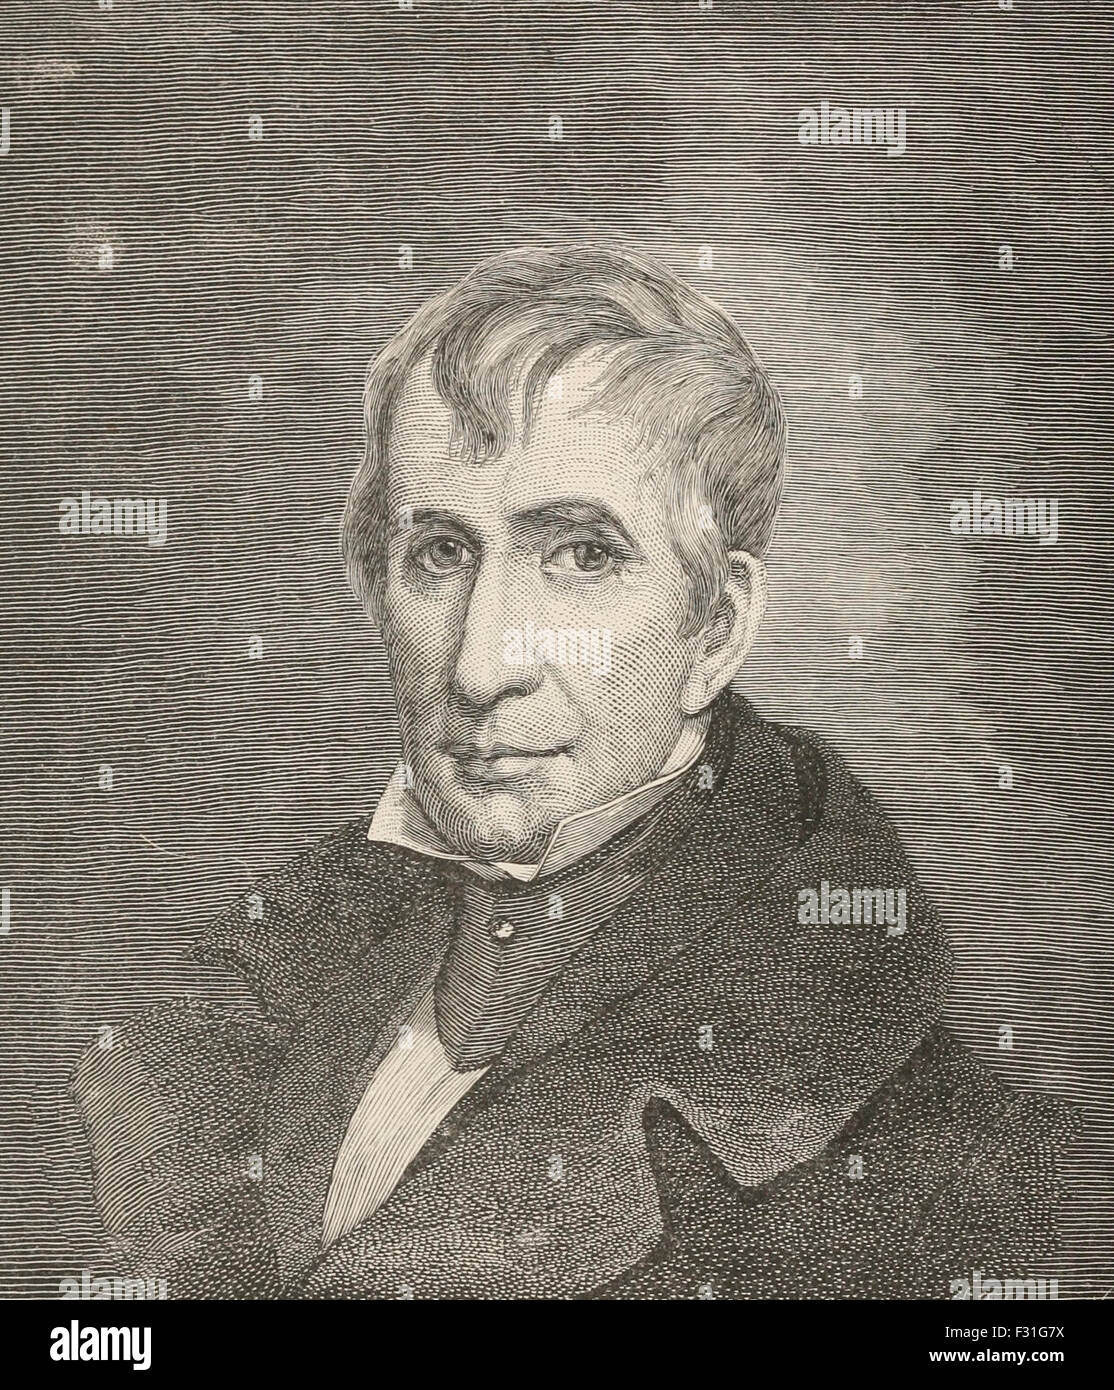 William Henry Harrison - Ninth President of the USA - 1841 Stock Photo